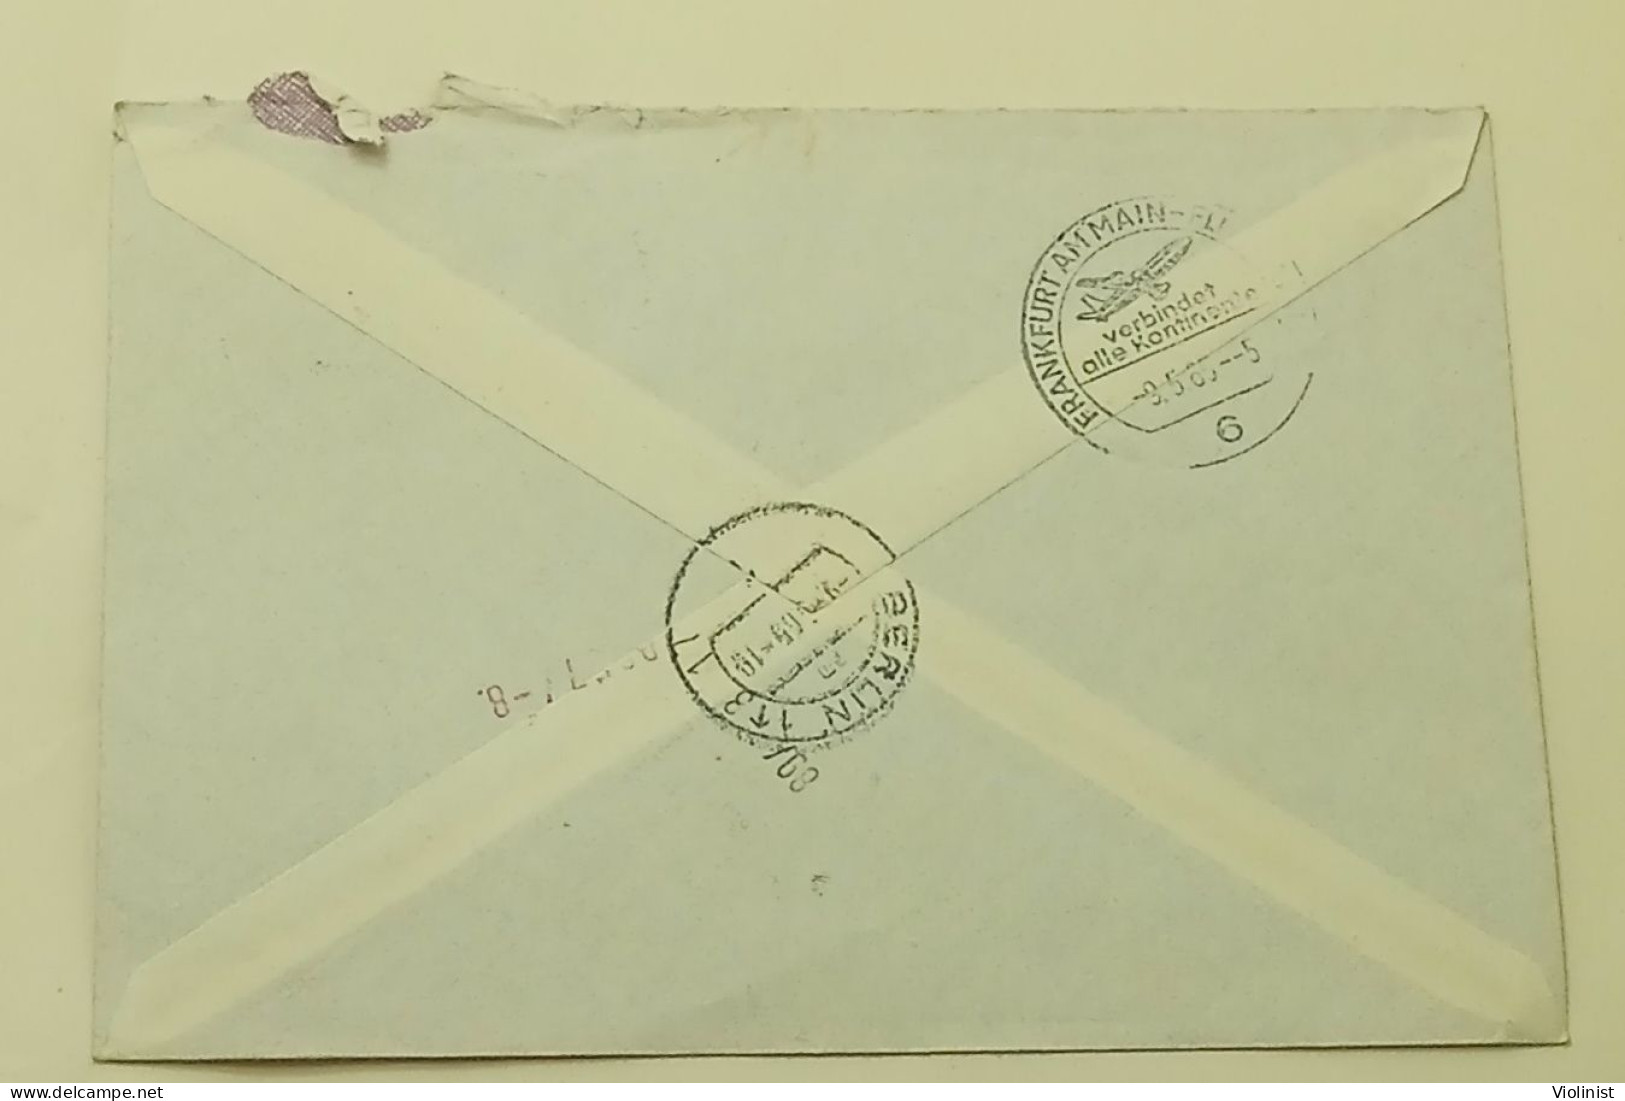 Deutsche Bundes Post-Expres-Augsburger Stenografenverein-postmark AUGSBURG 1965. - Sobres Privados - Usados